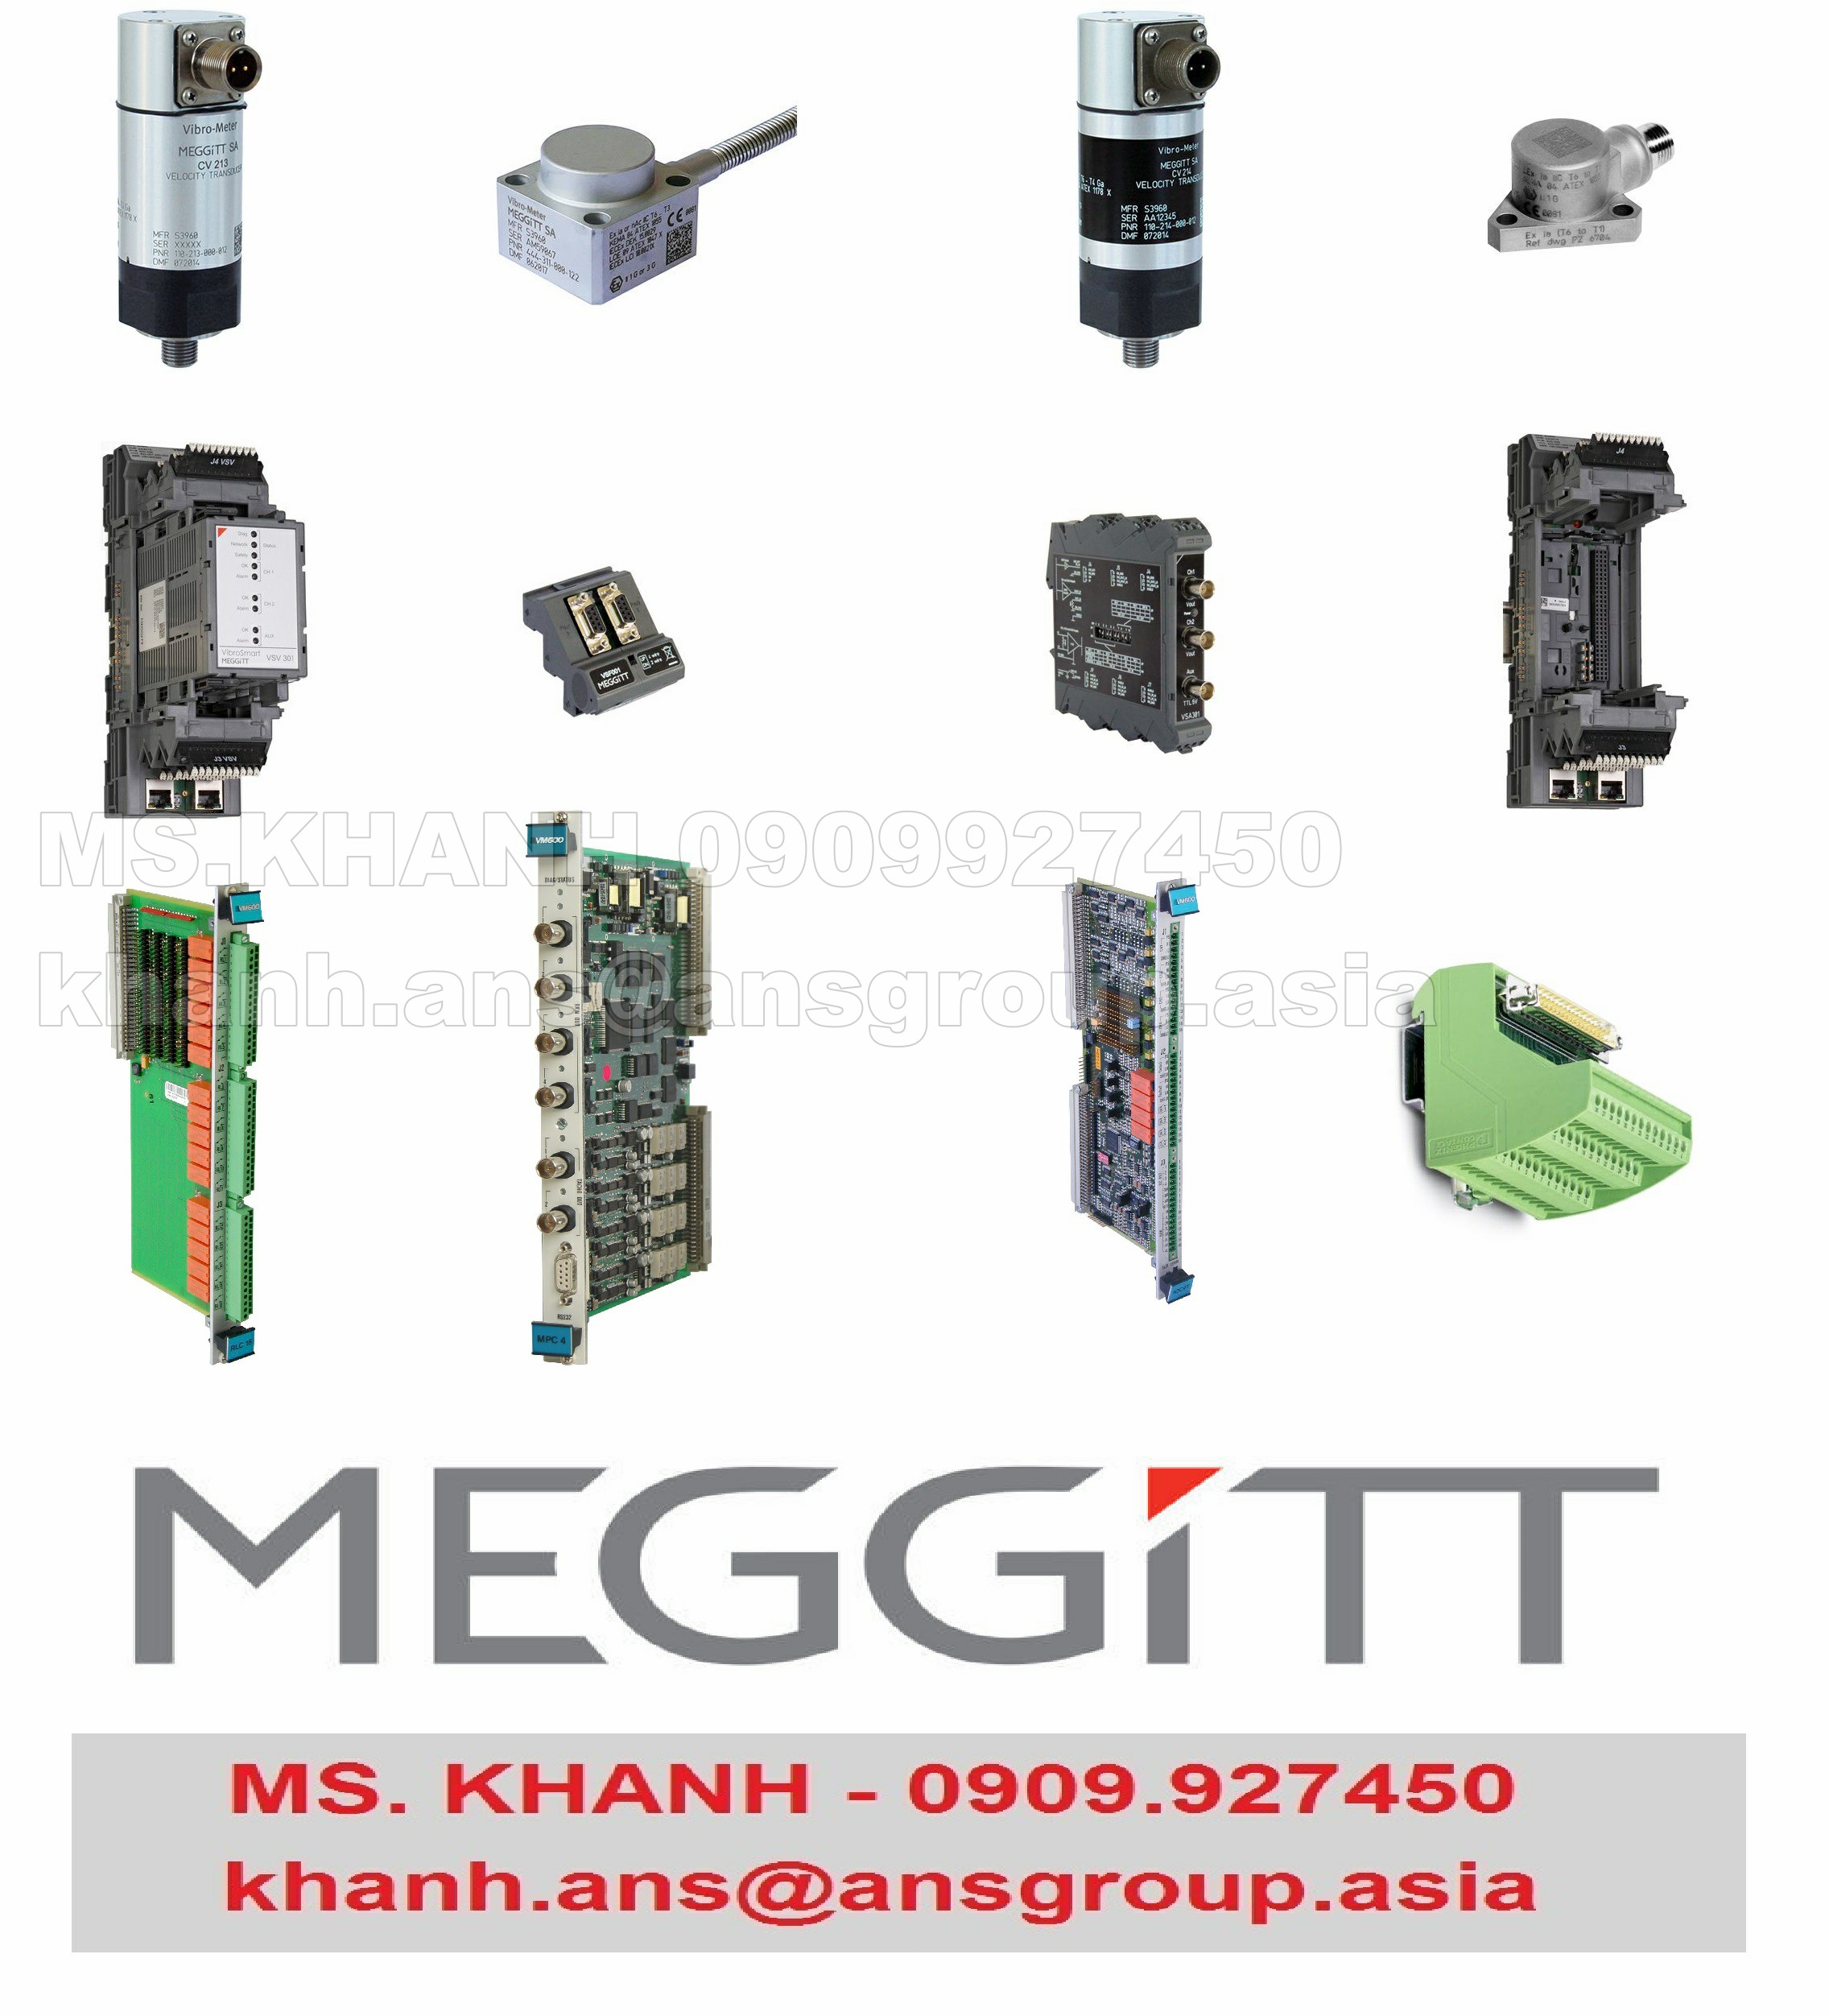 thiet-bi-200-510-sss-1hh-machinery-protection-card-mpc4-meggitt-vietnam.png